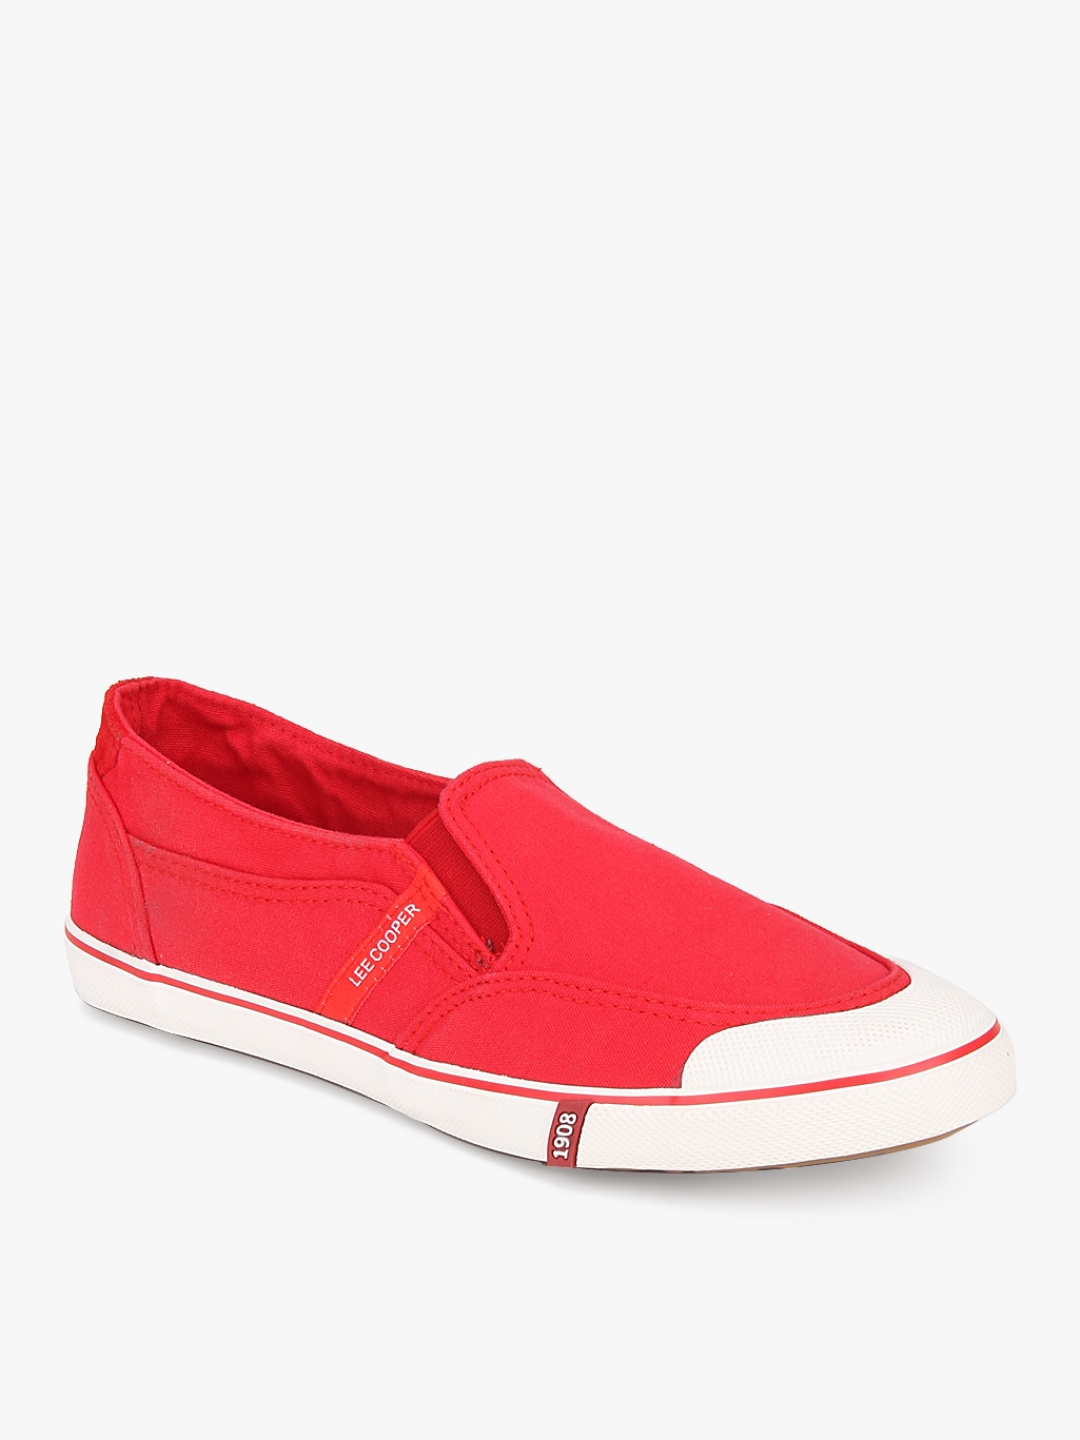 Buy Lee Cooper Men Red Slip On Sneakers - Casual Shoes for Men 1789415 ...